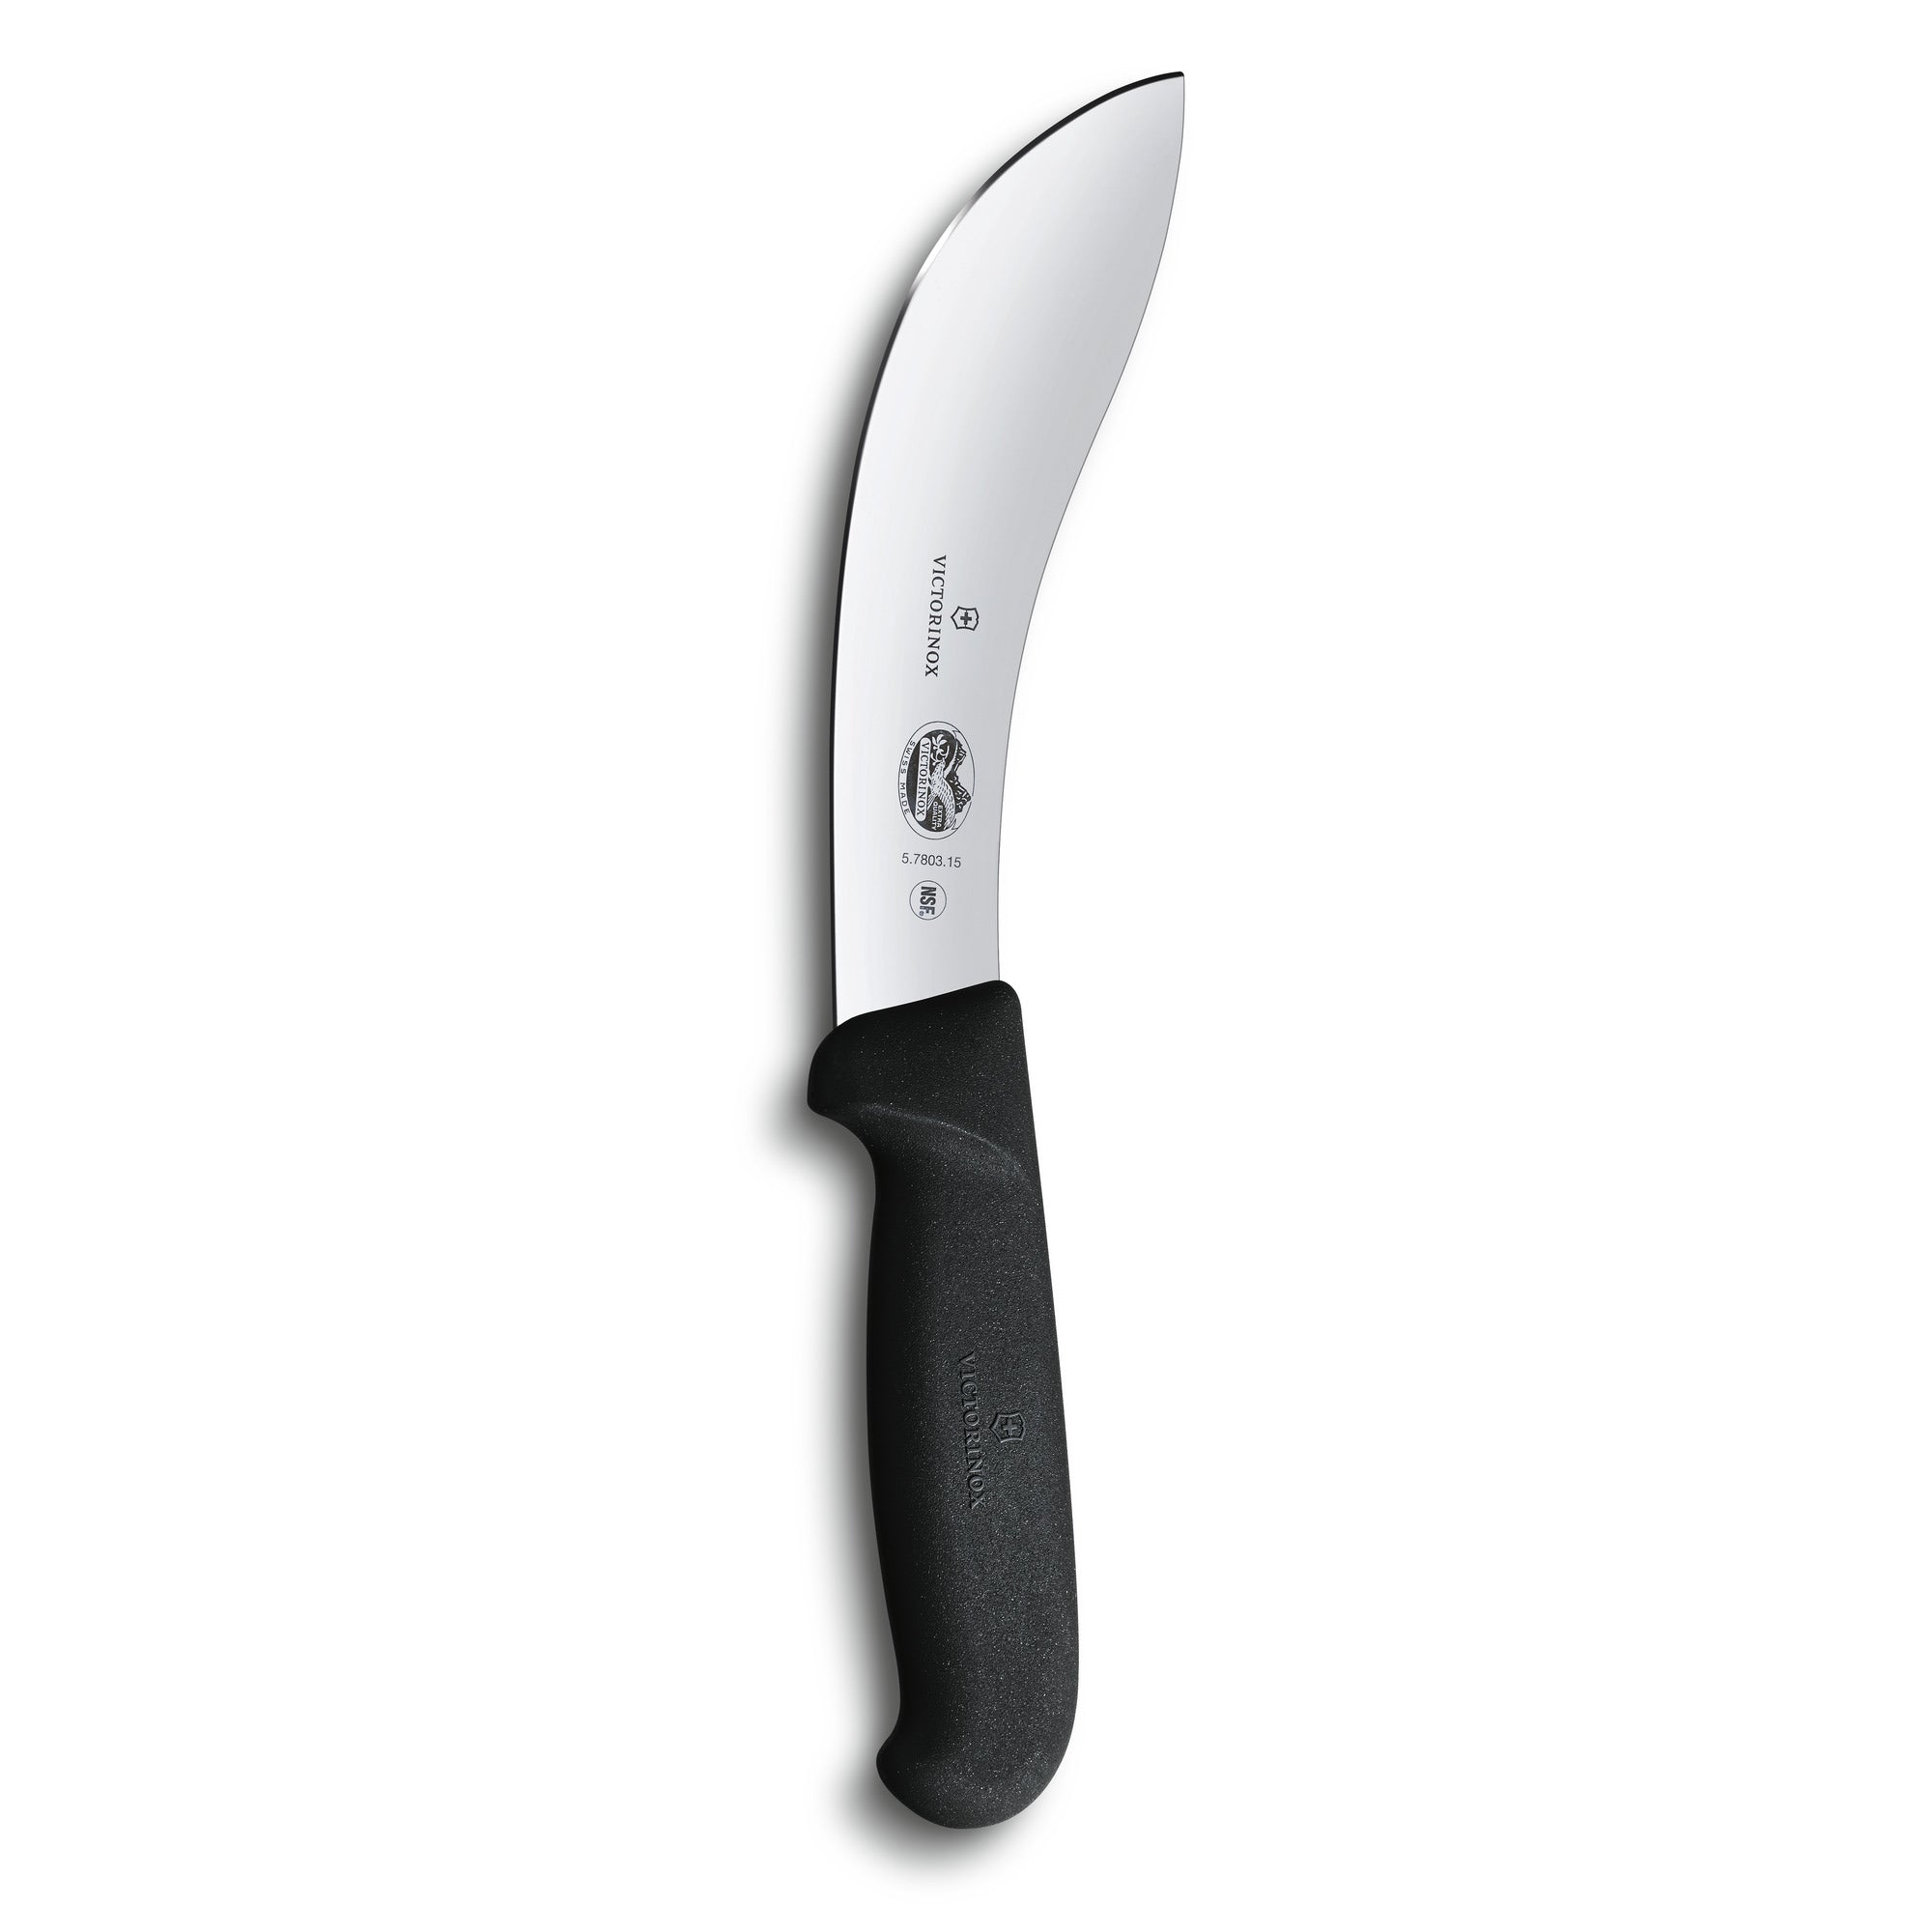 Victorinox Fibrox Curved Wide Brisket Knife 25cm